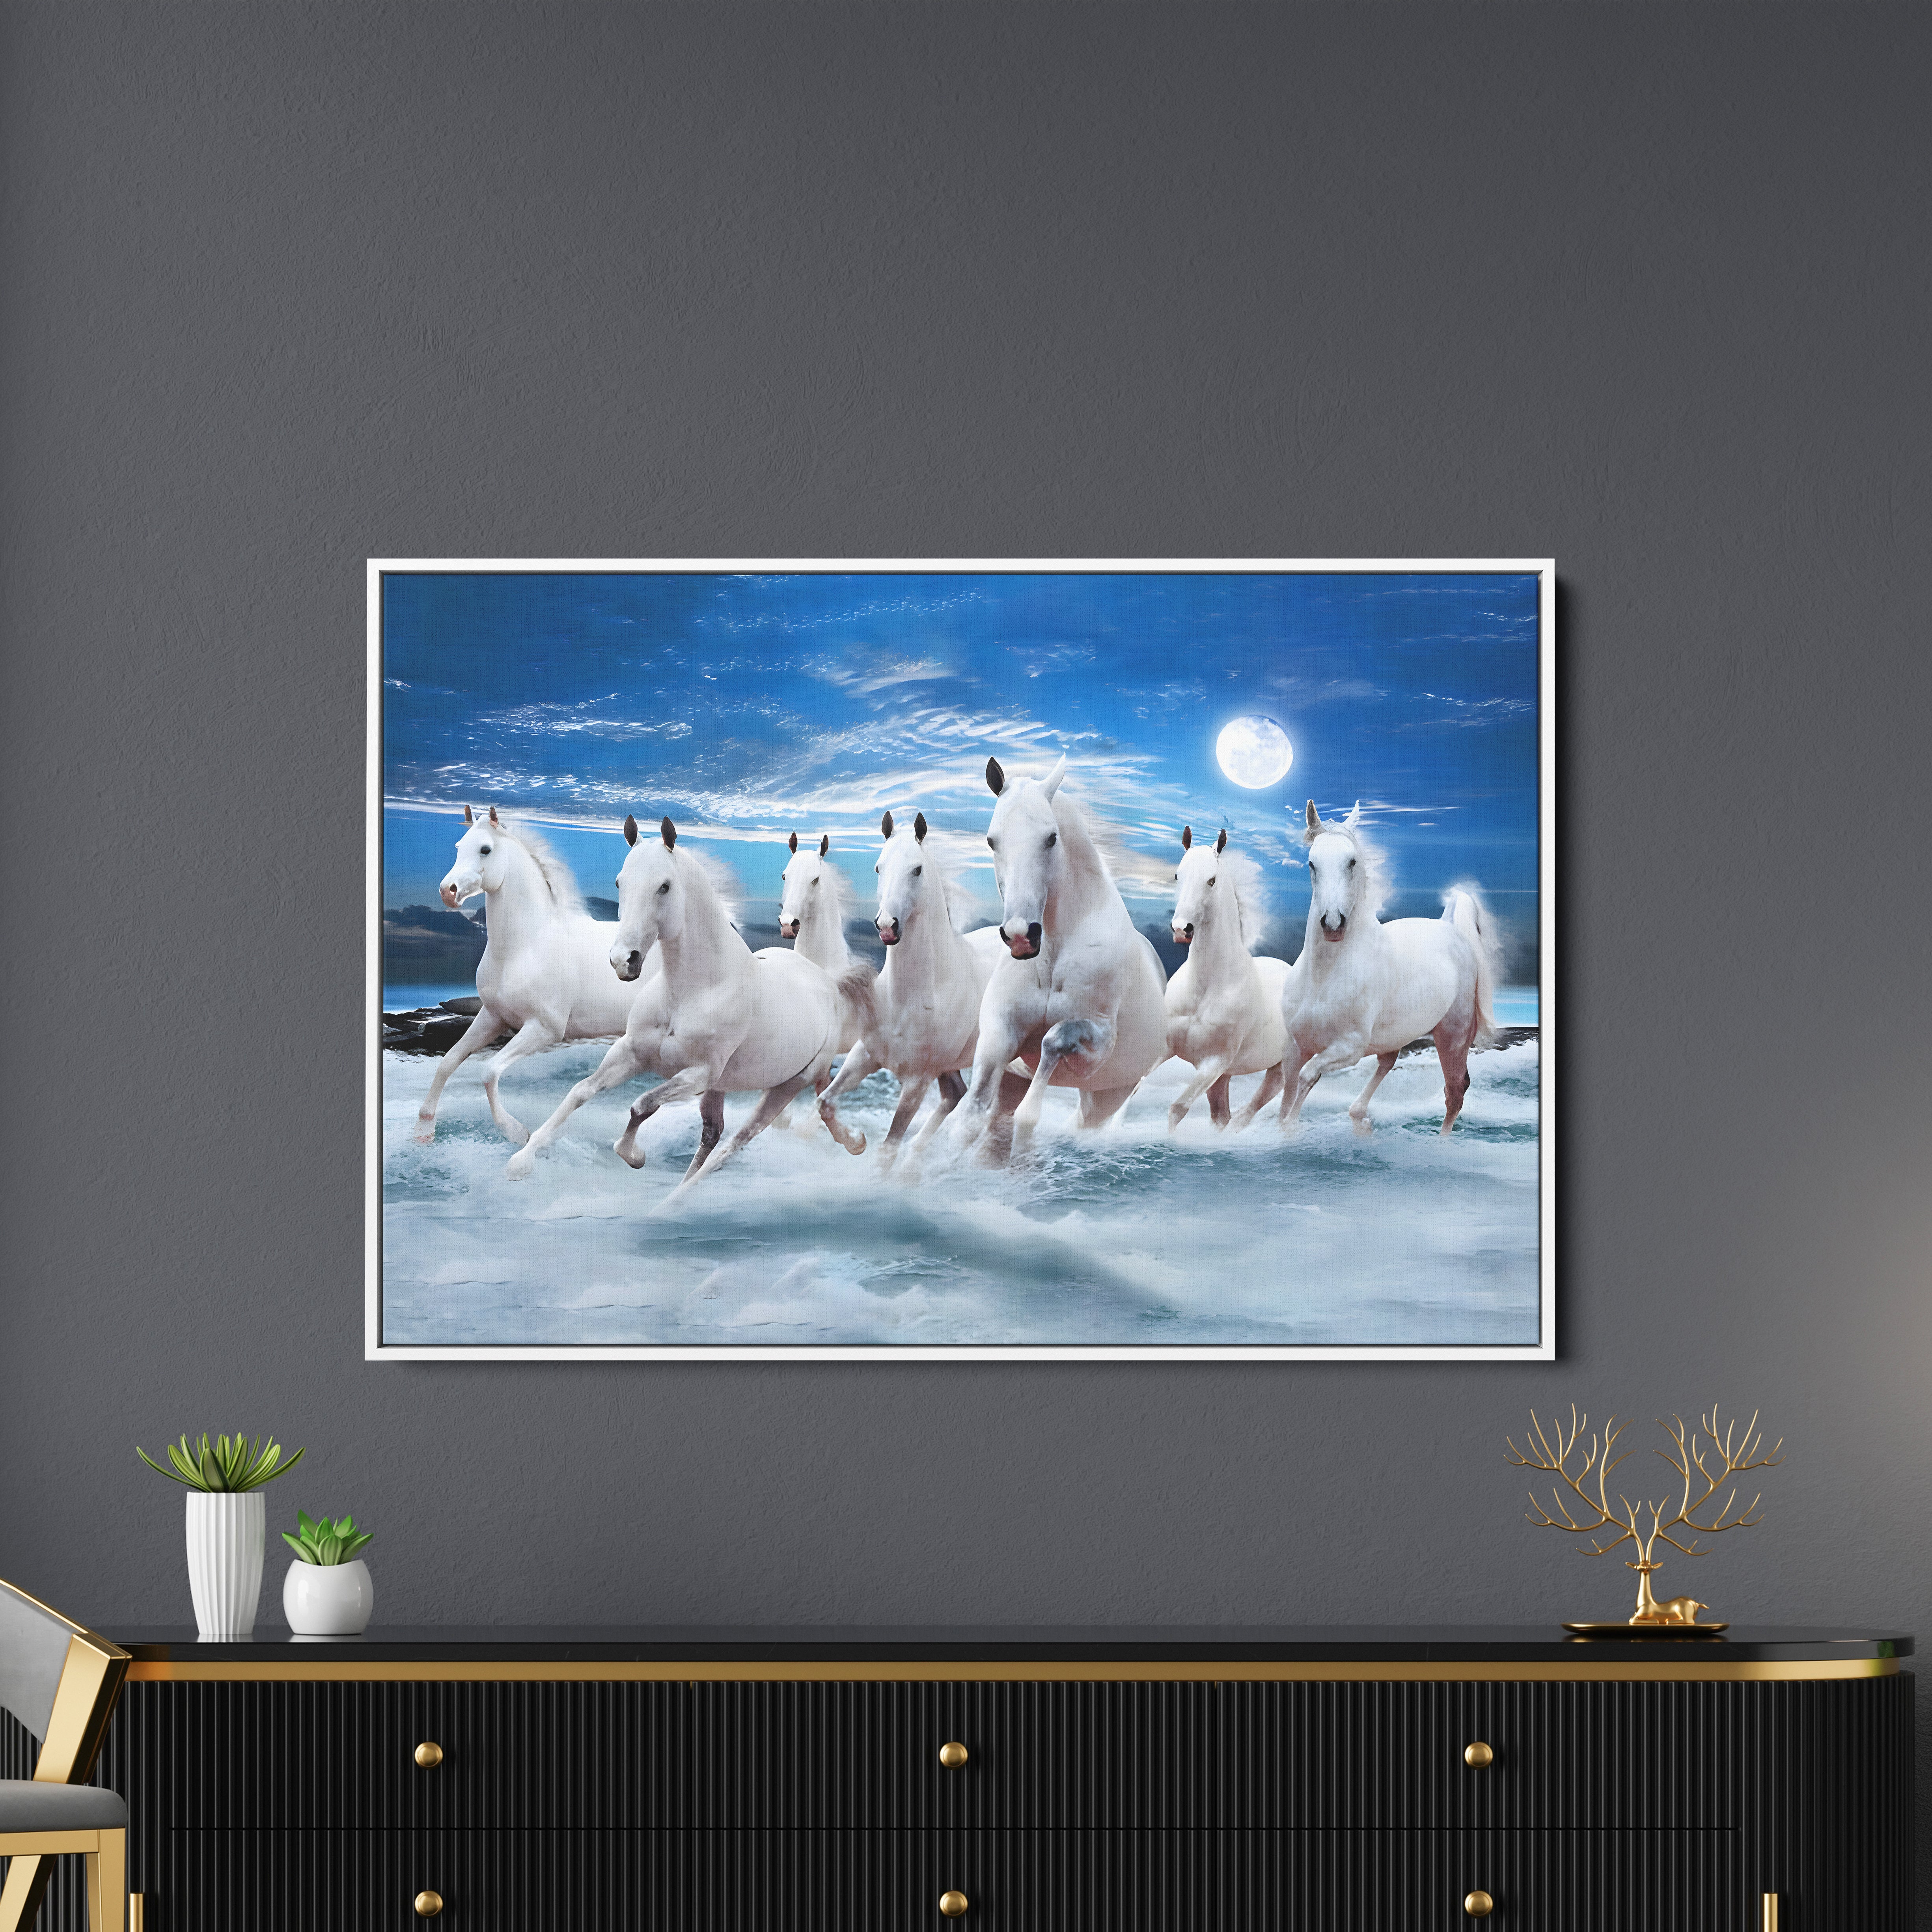 Seven Horses Wall Painting